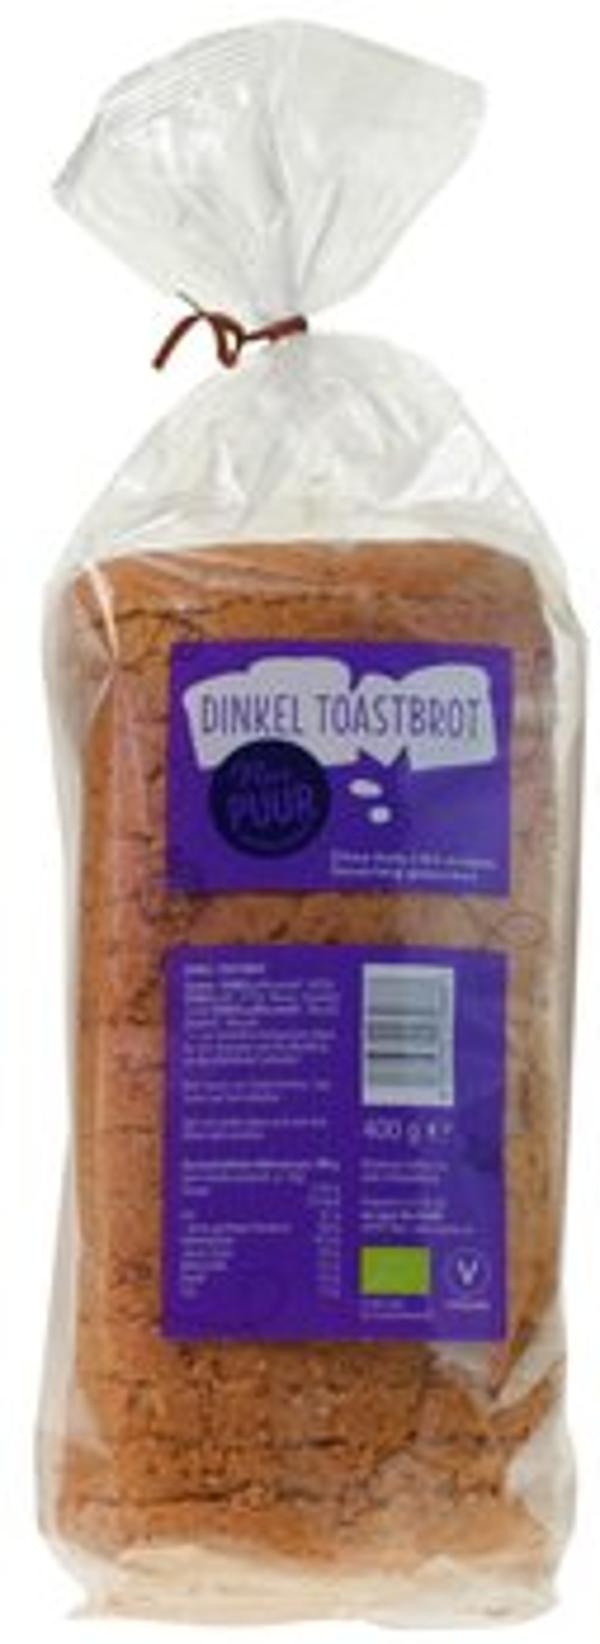 Produktfoto zu Dinkel-Toastbrot 400g